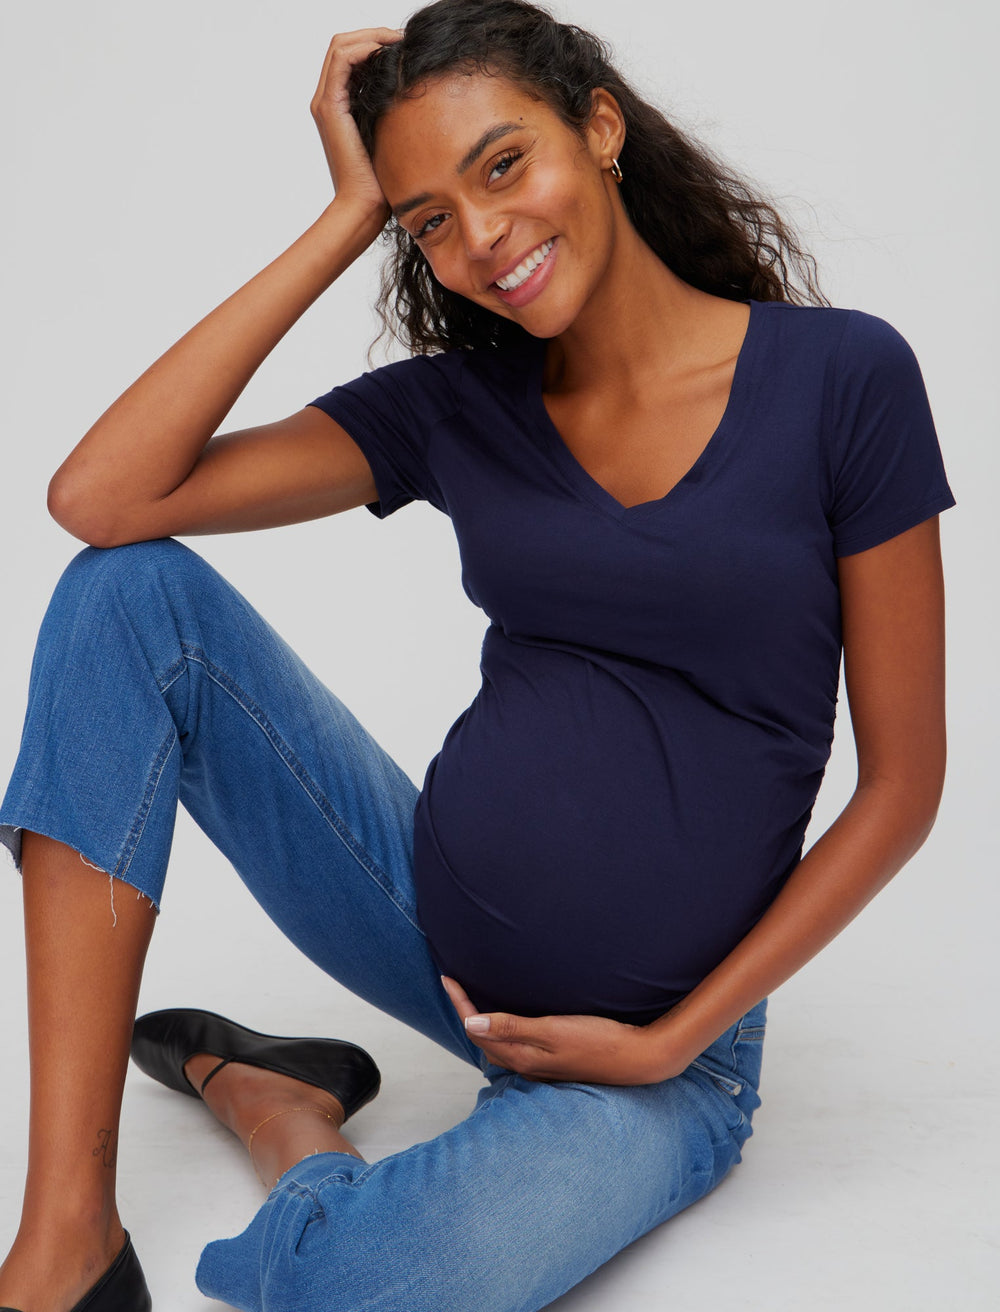 Indigo Blue Solid Black Jeans Size L (Maternity) - 52% off